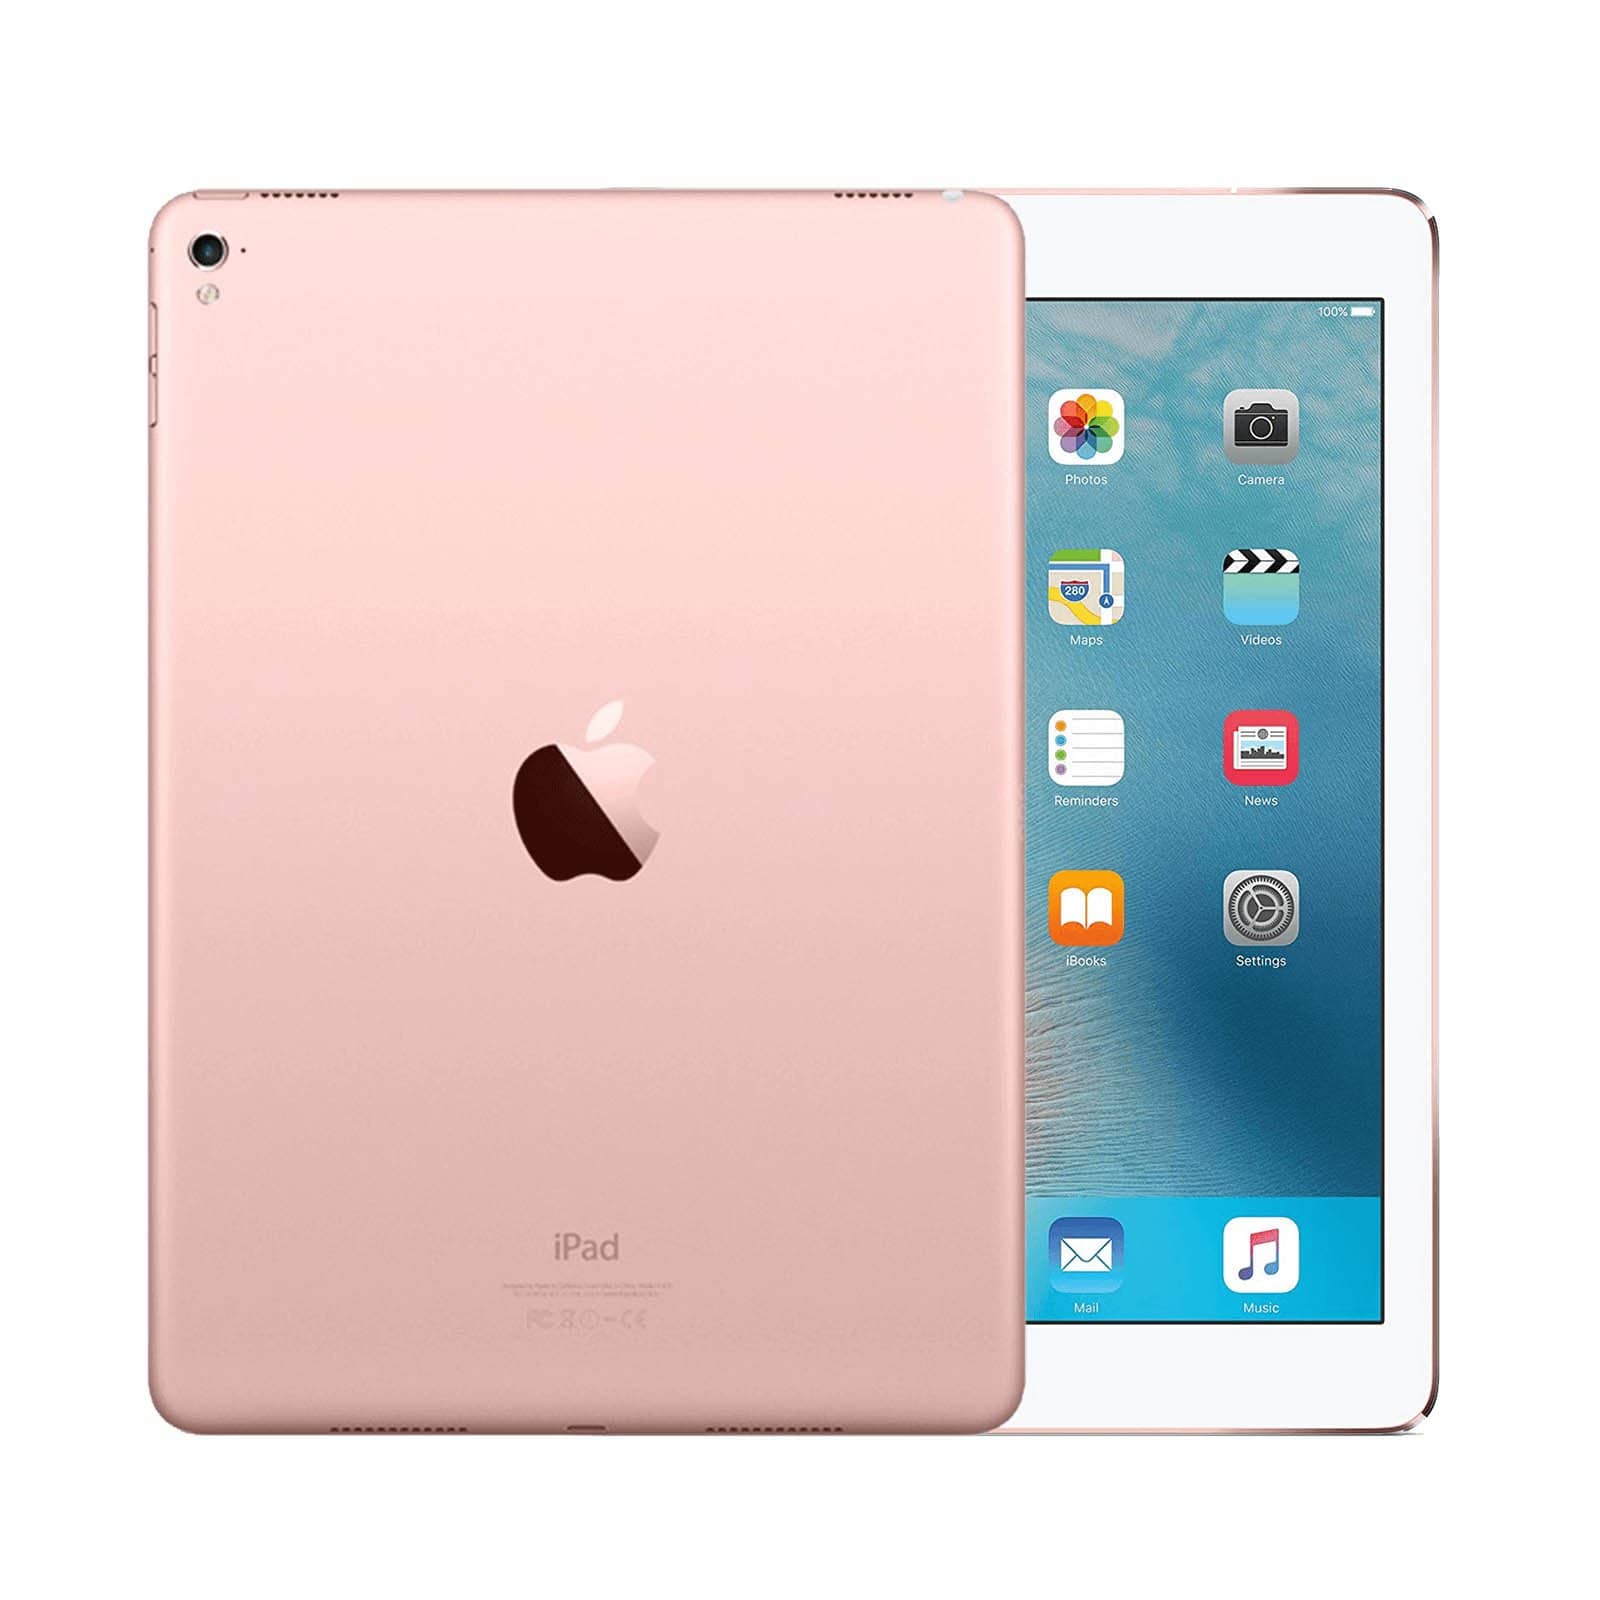 iPad Pro 9.7 Inch 32GB Rose Gold Pristine - WiFi 32GB Rose Gold Pristine